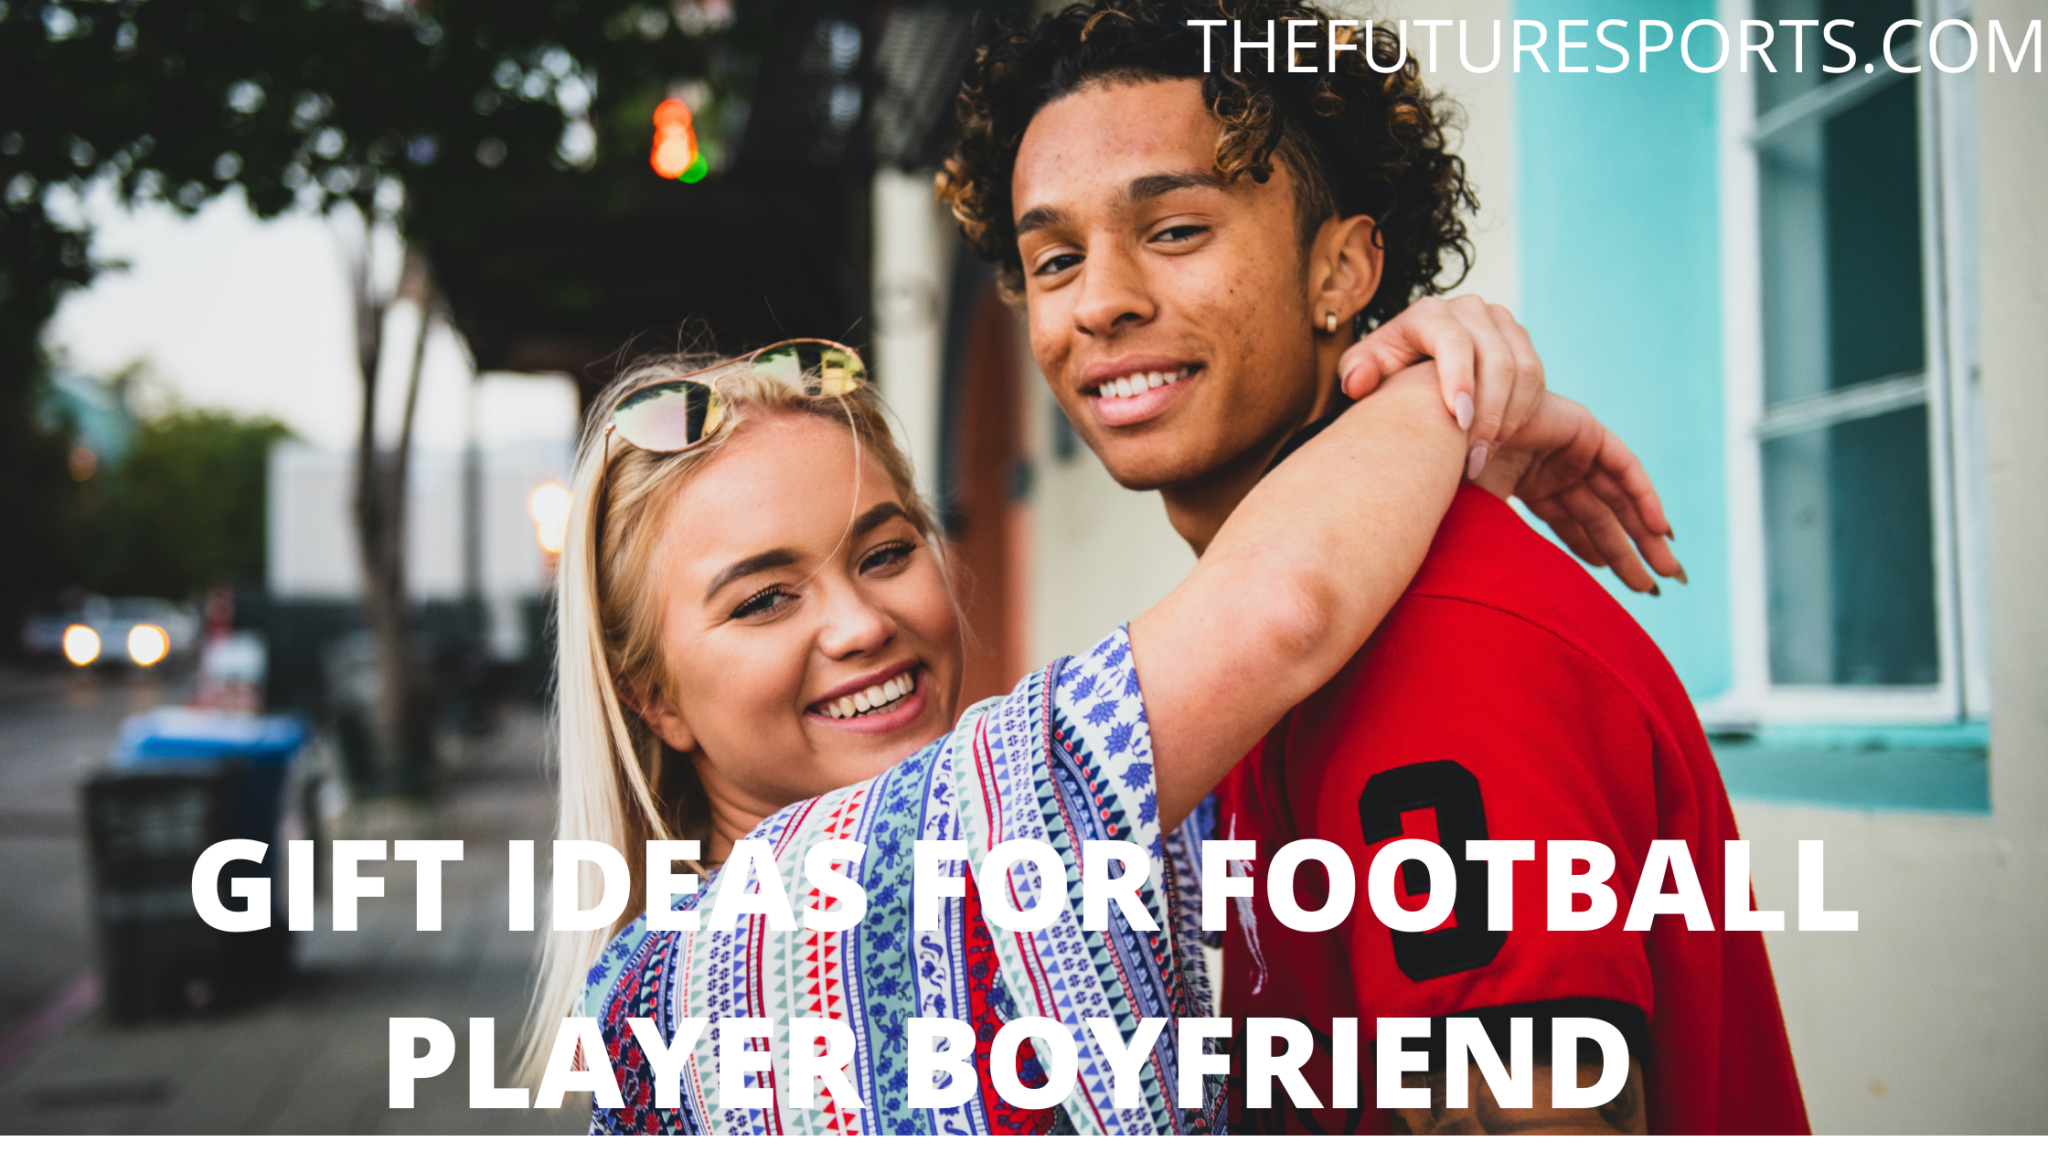 Gift ideas for football players boyfriend